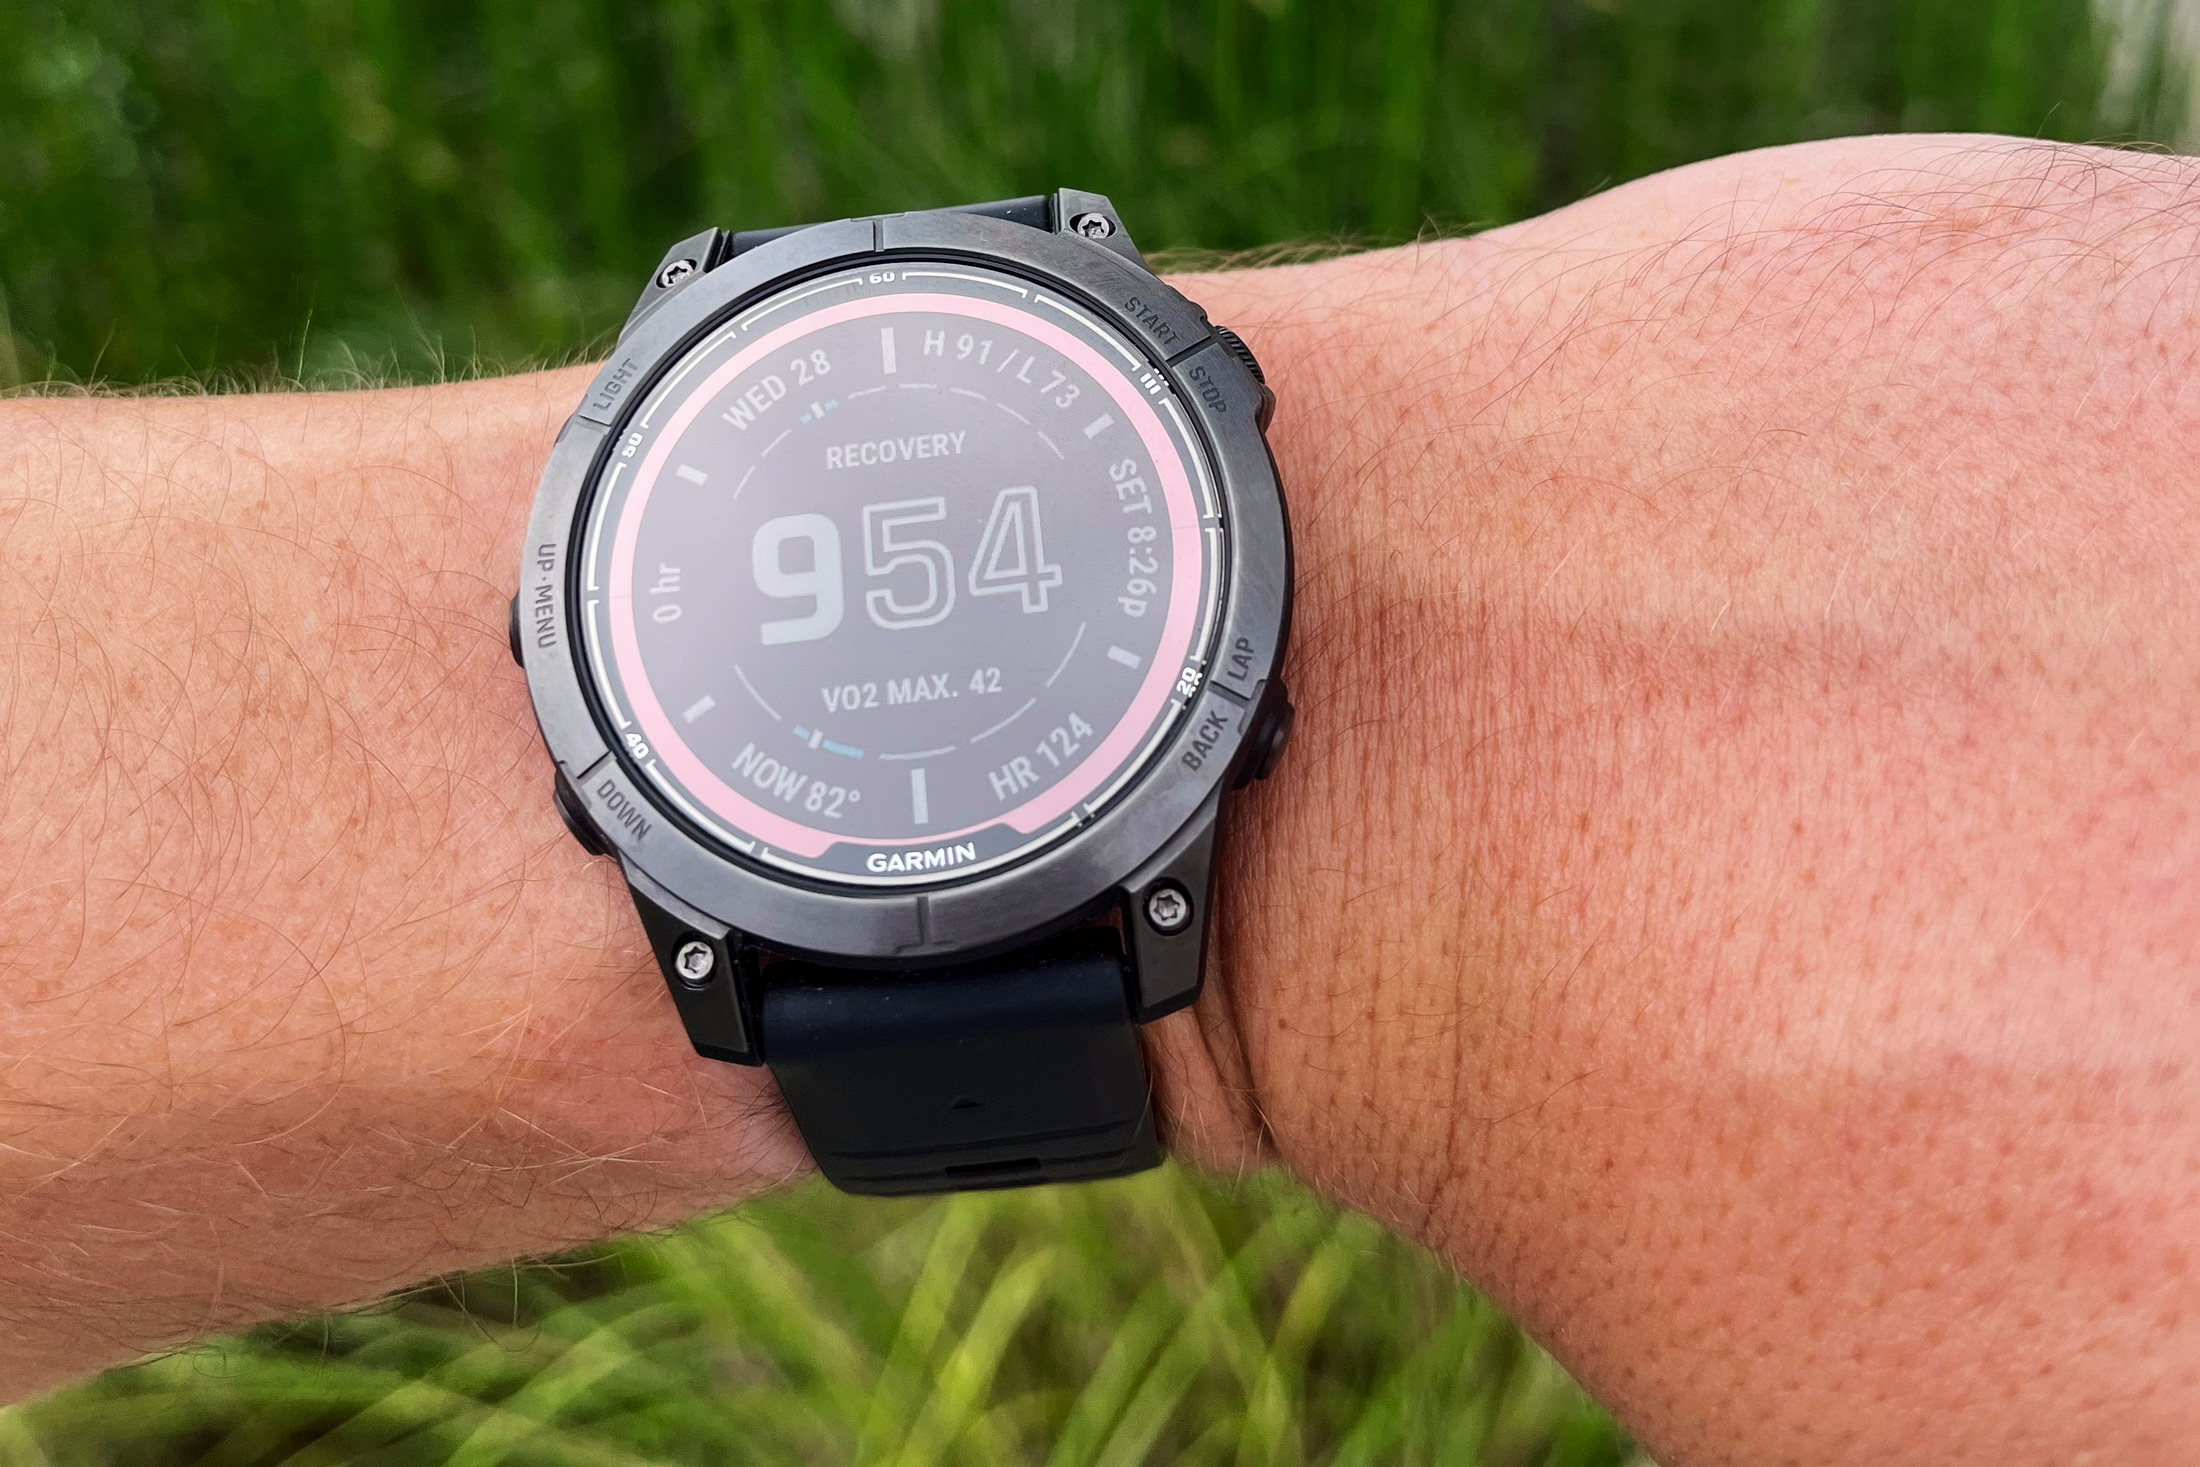 Garmin fÄnix 7 Pro hiking watch on a wrist